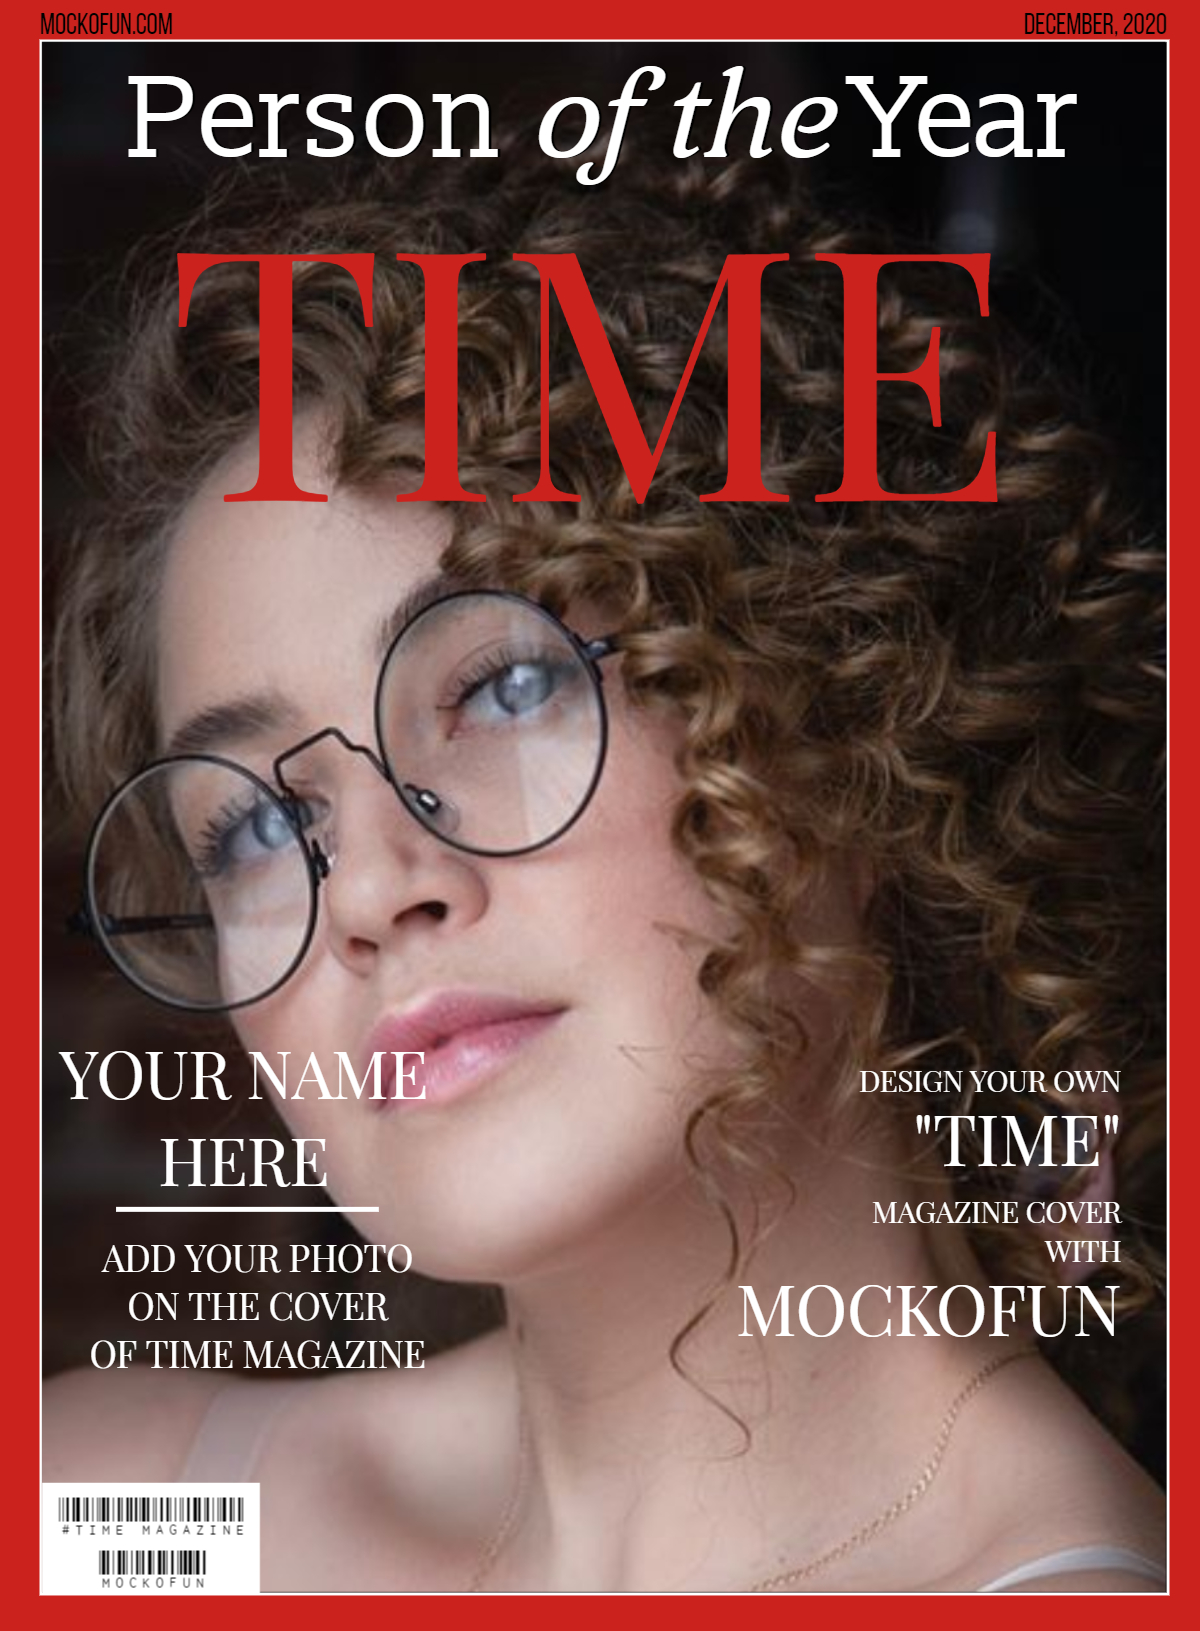  FREE Time Magazine Cover Template MockoFUN